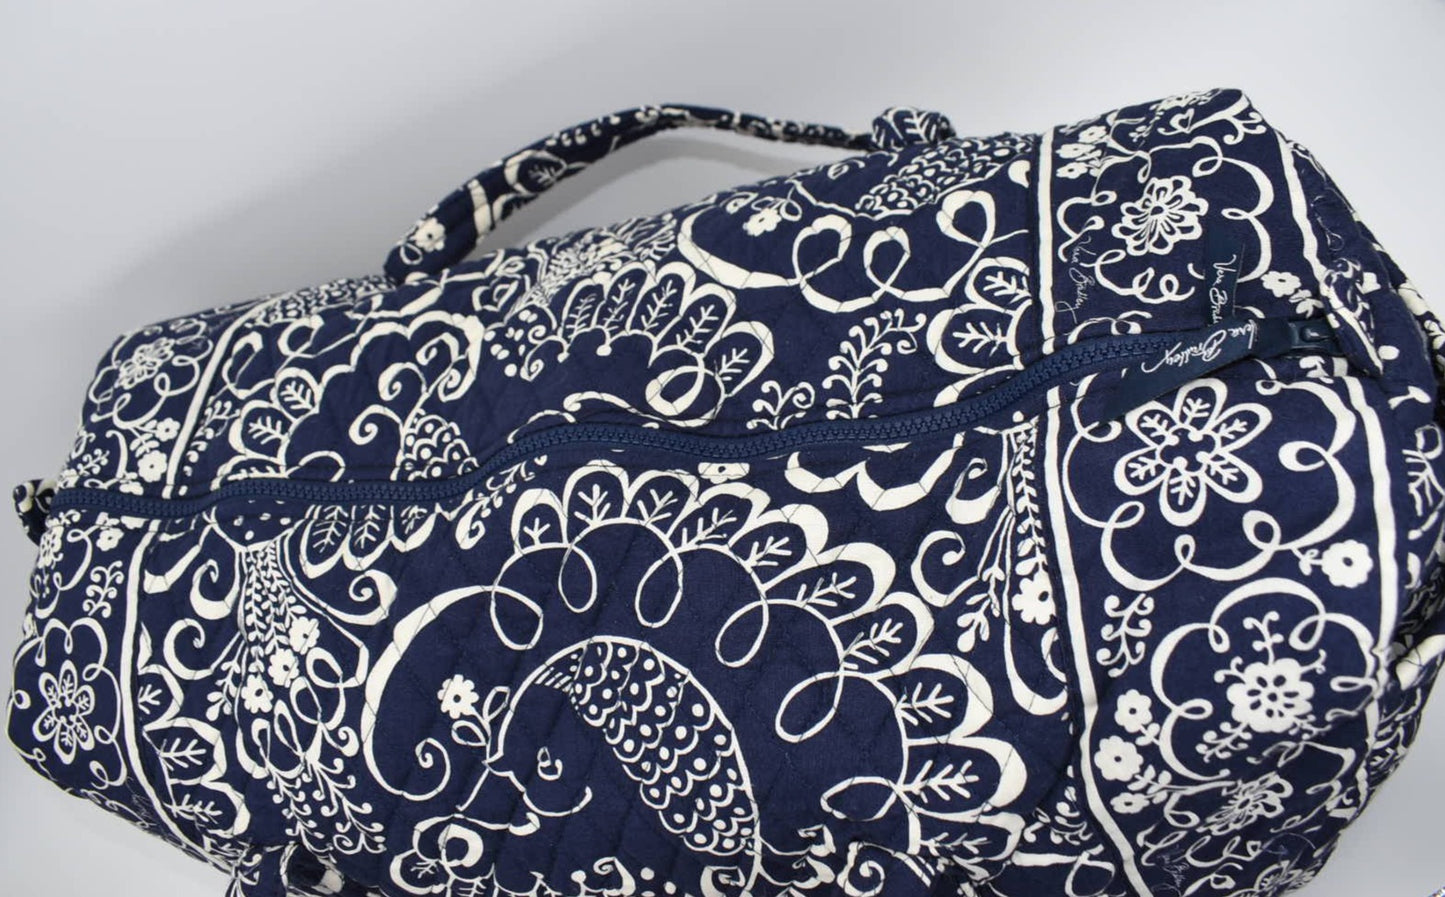 Vera Bradley Large Duffel Bag in "Twirly Birds Navy" Pattern